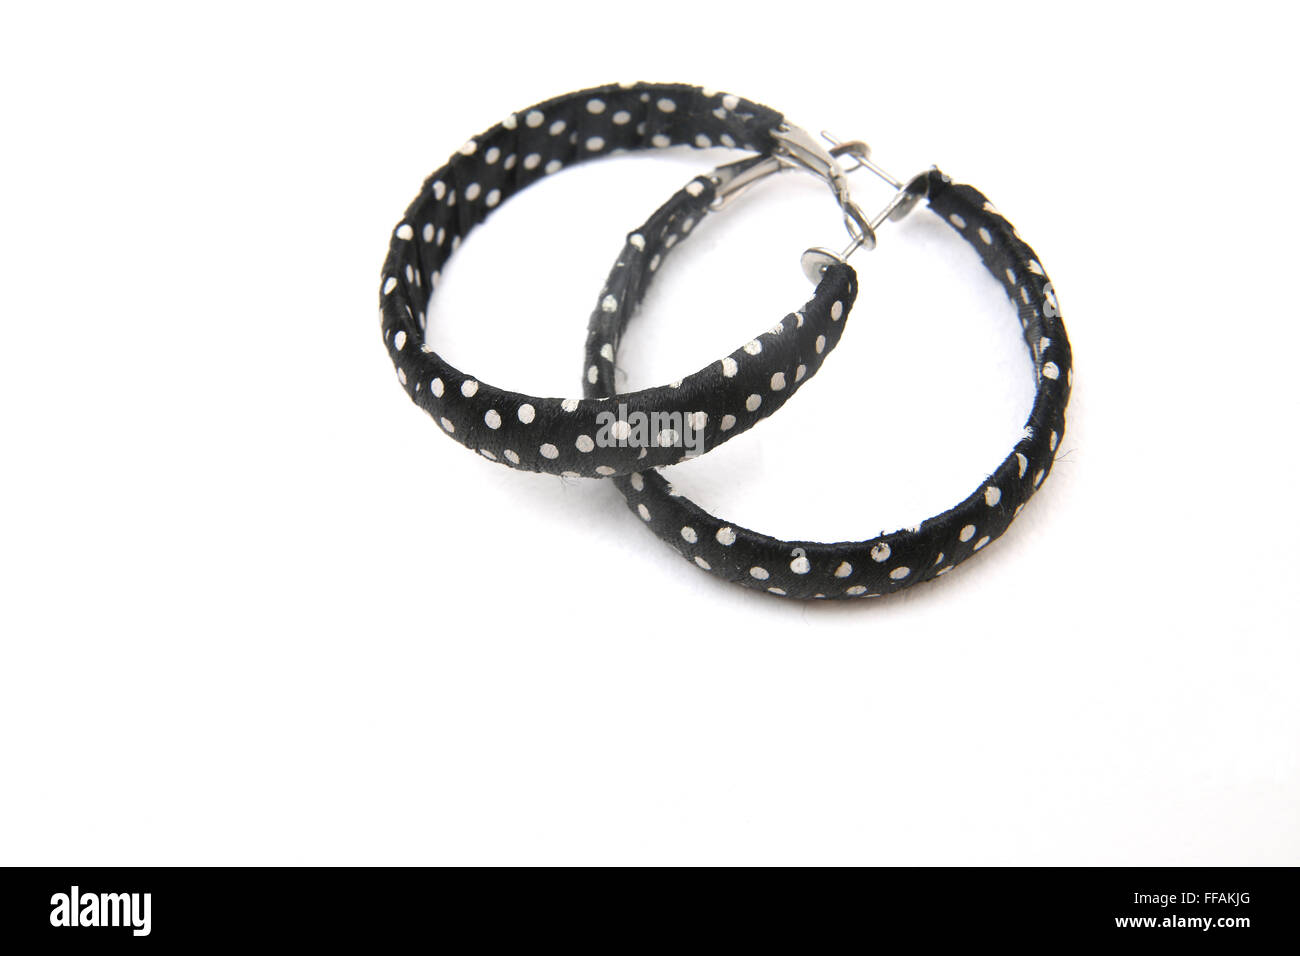 Dress Jewellery - Black And White Polka Dot Hoop Earrings Stock Photo -  Alamy